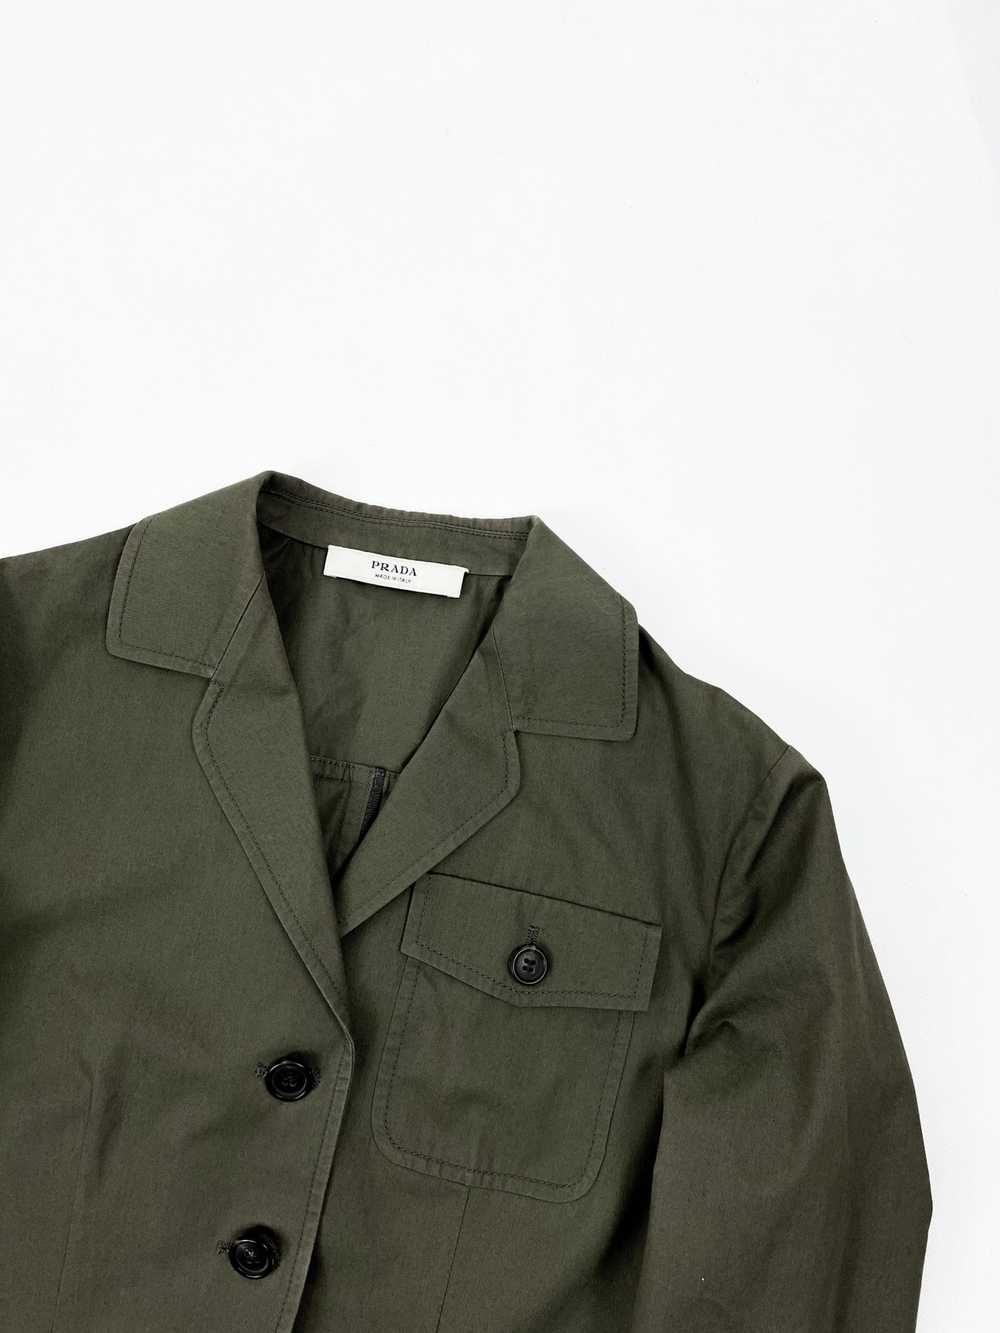 Prada Prada olive green blazer jacket - image 6